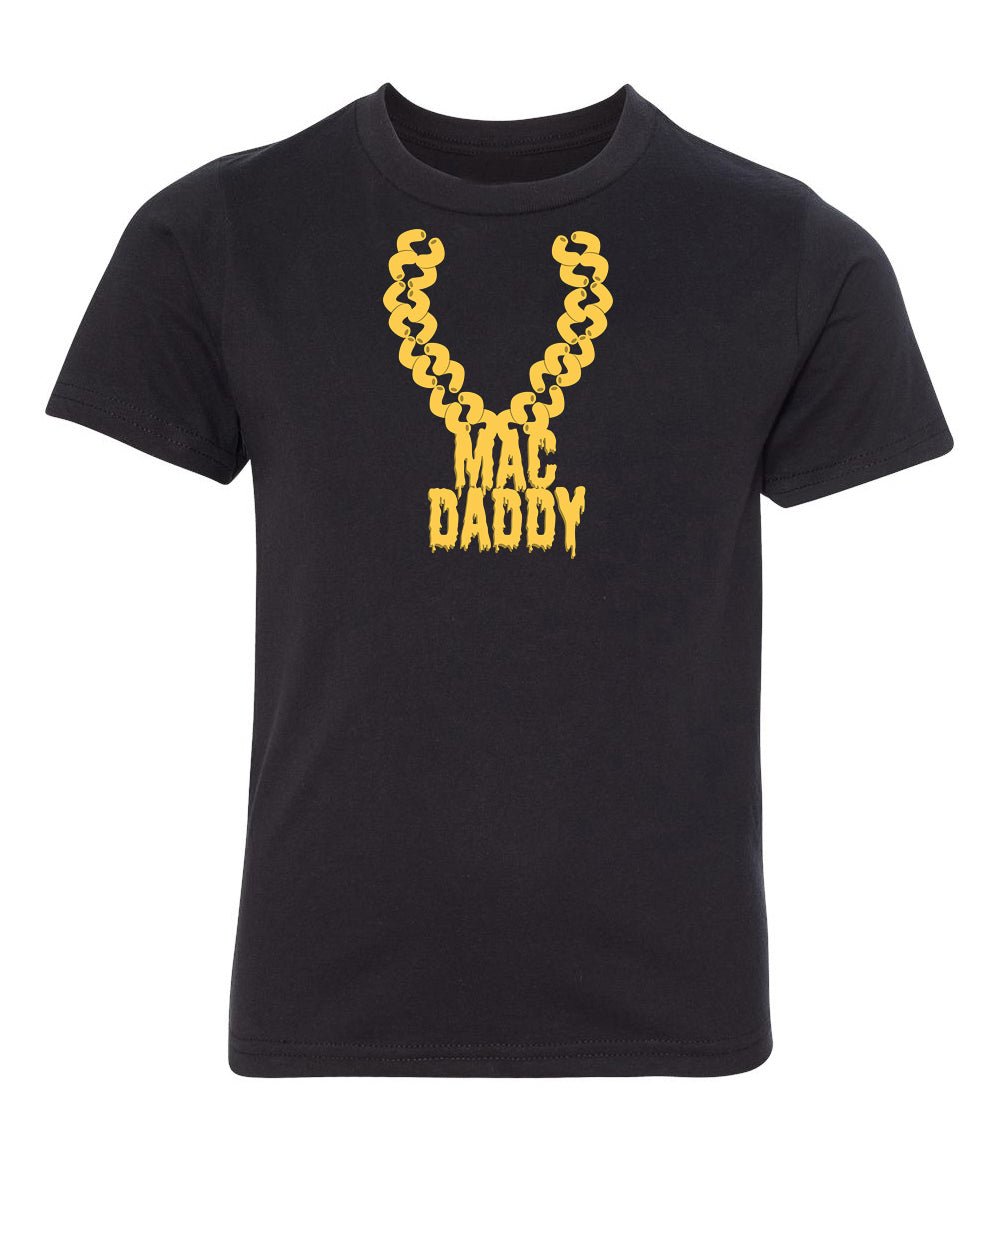 Roblox Youth Boys Power Up Black T-Shirt M 100% Cotton